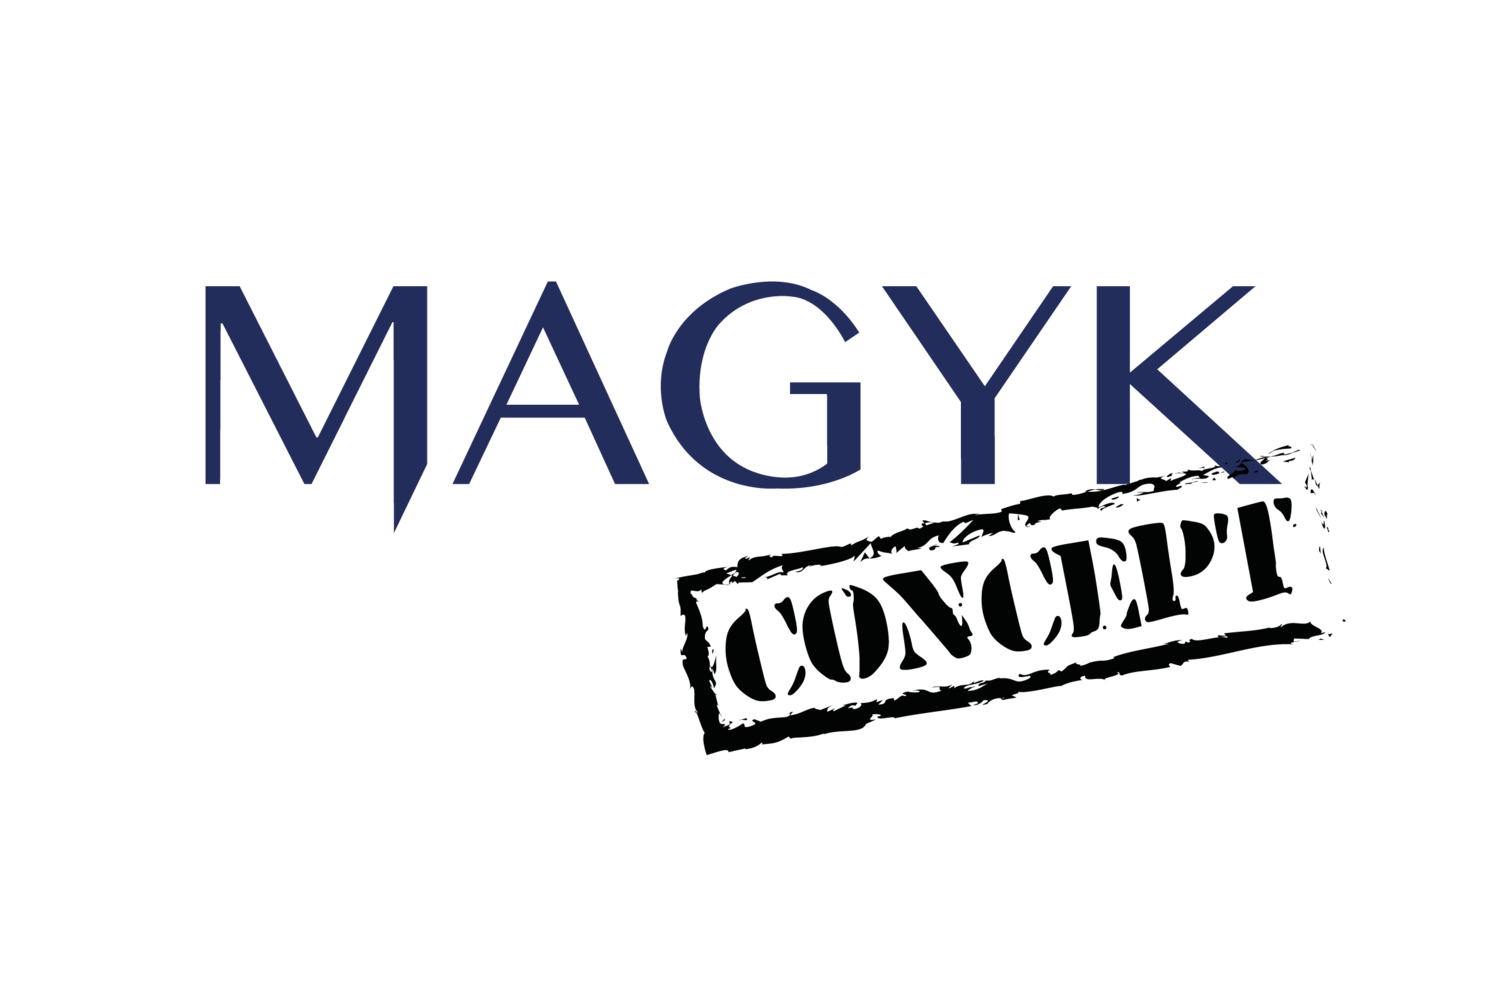 Magyk Concept